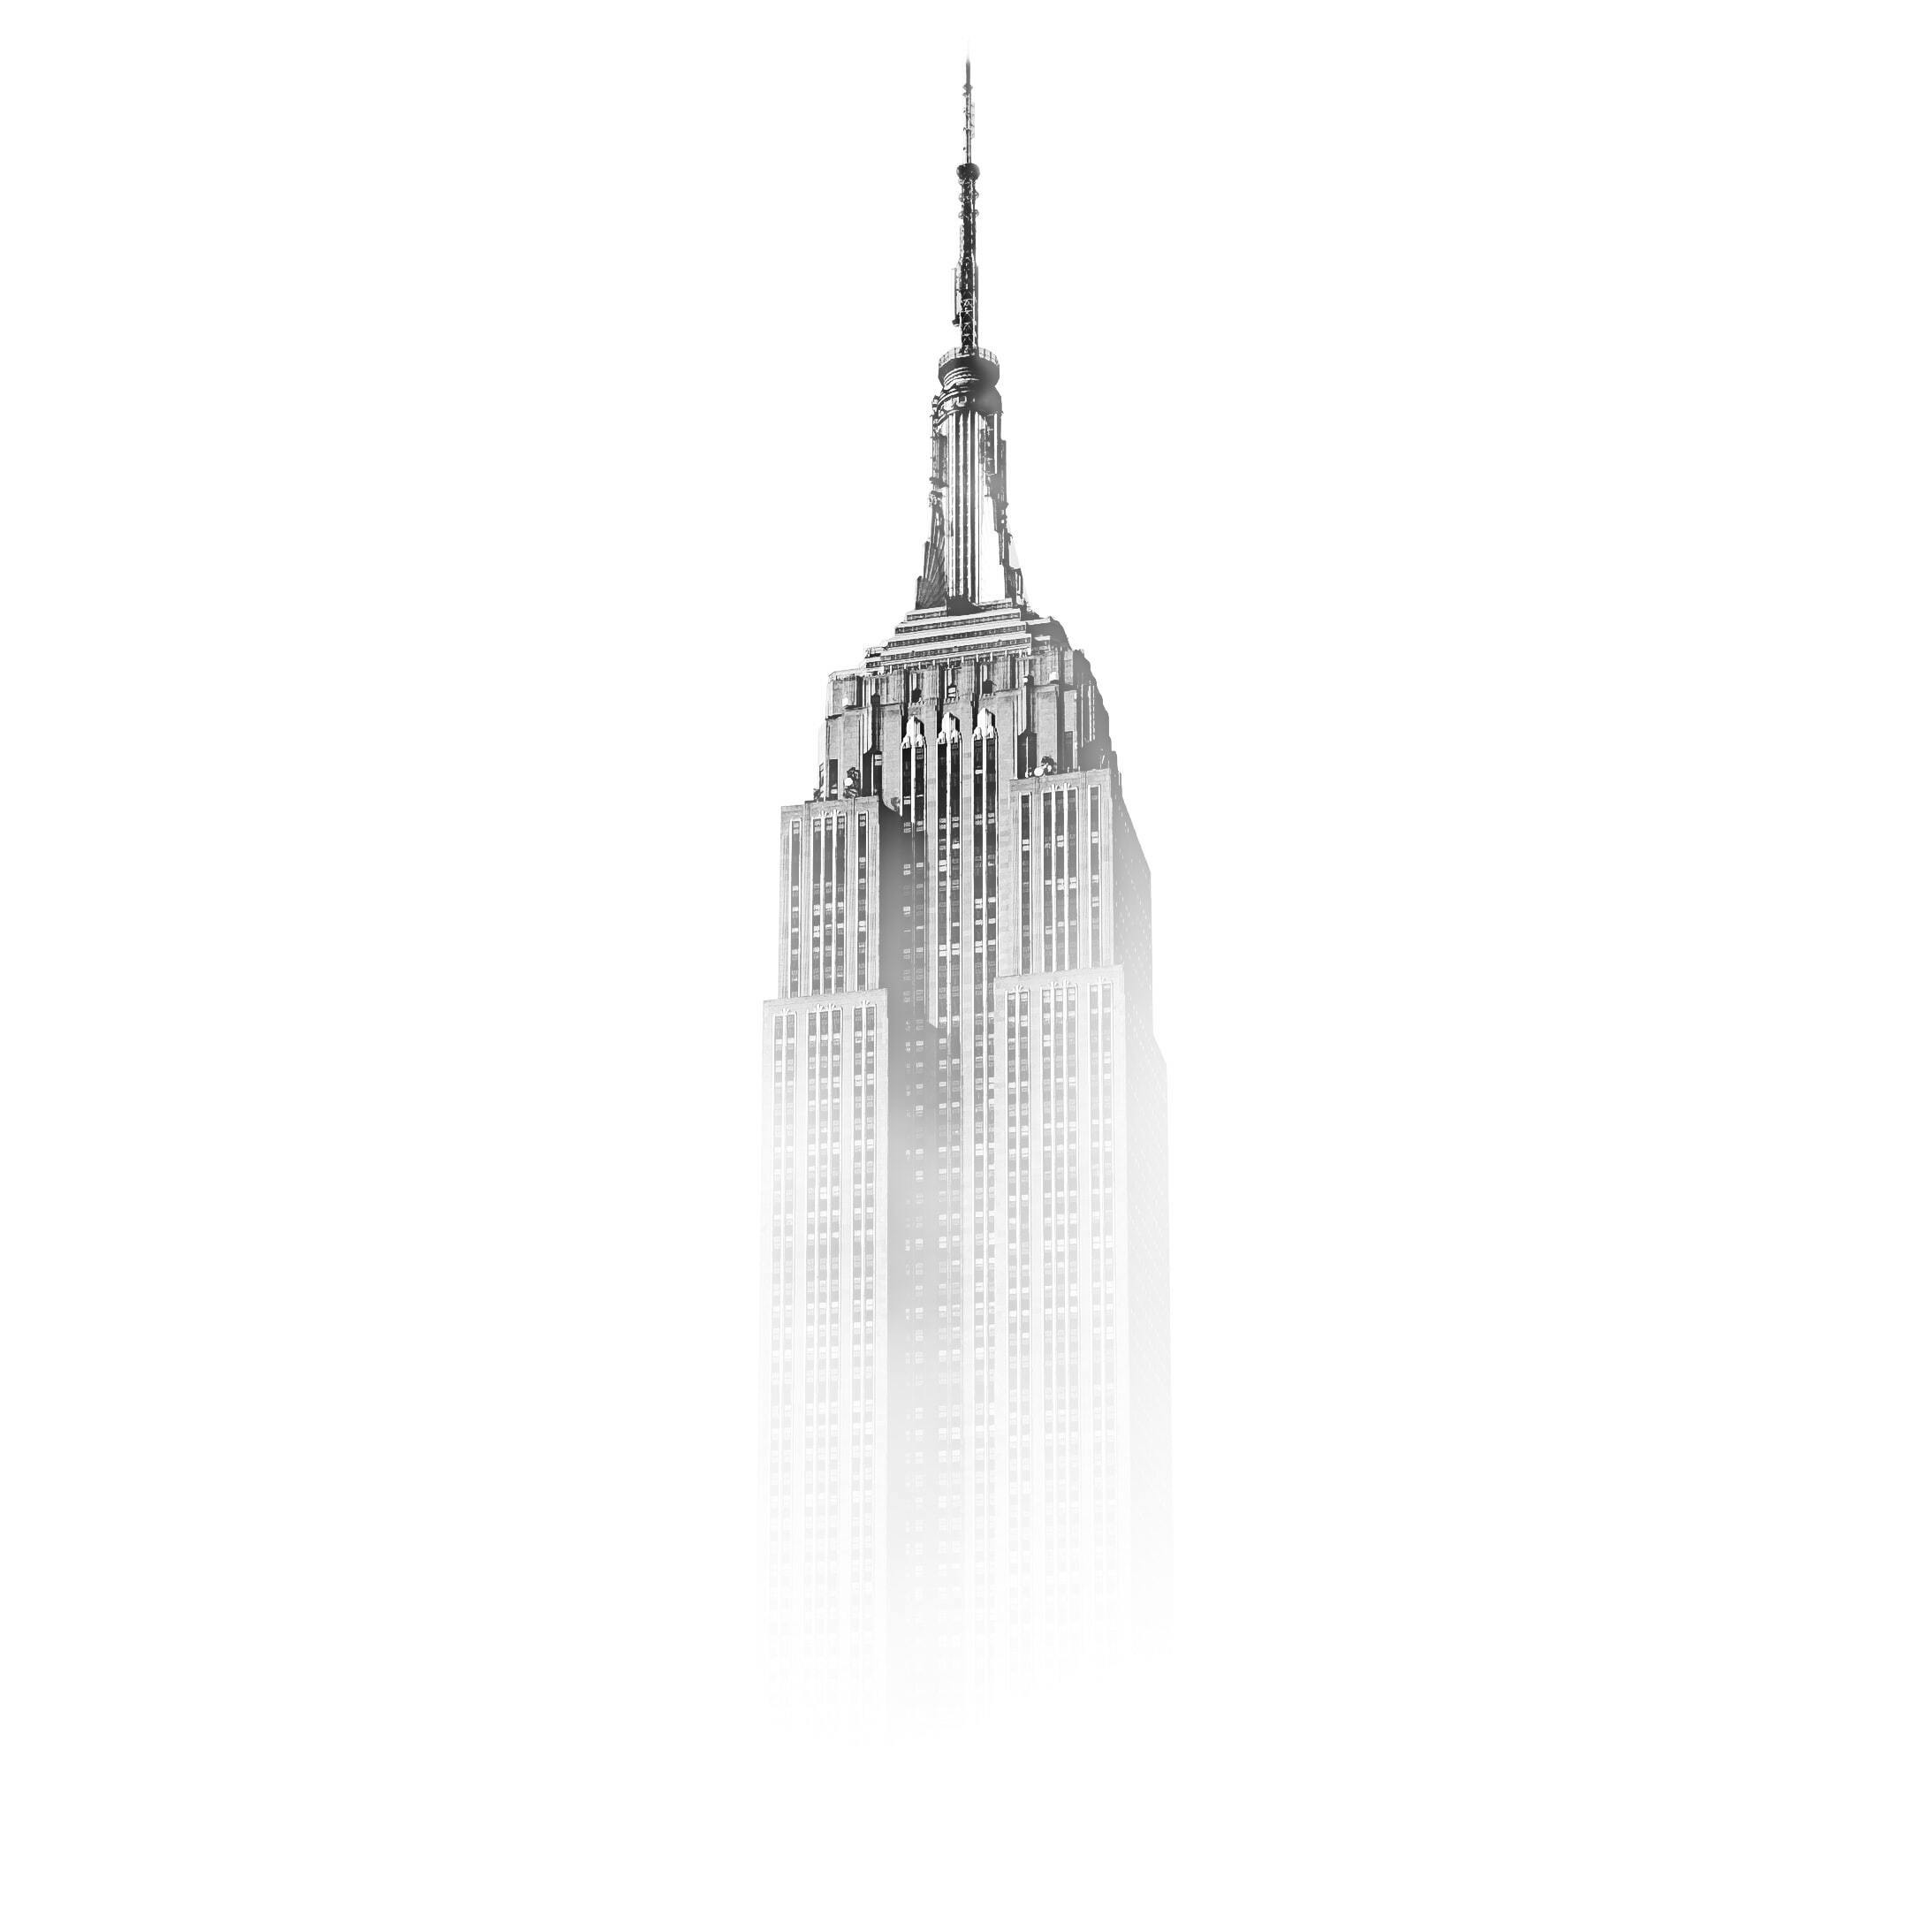 Empire State Building photoshopé